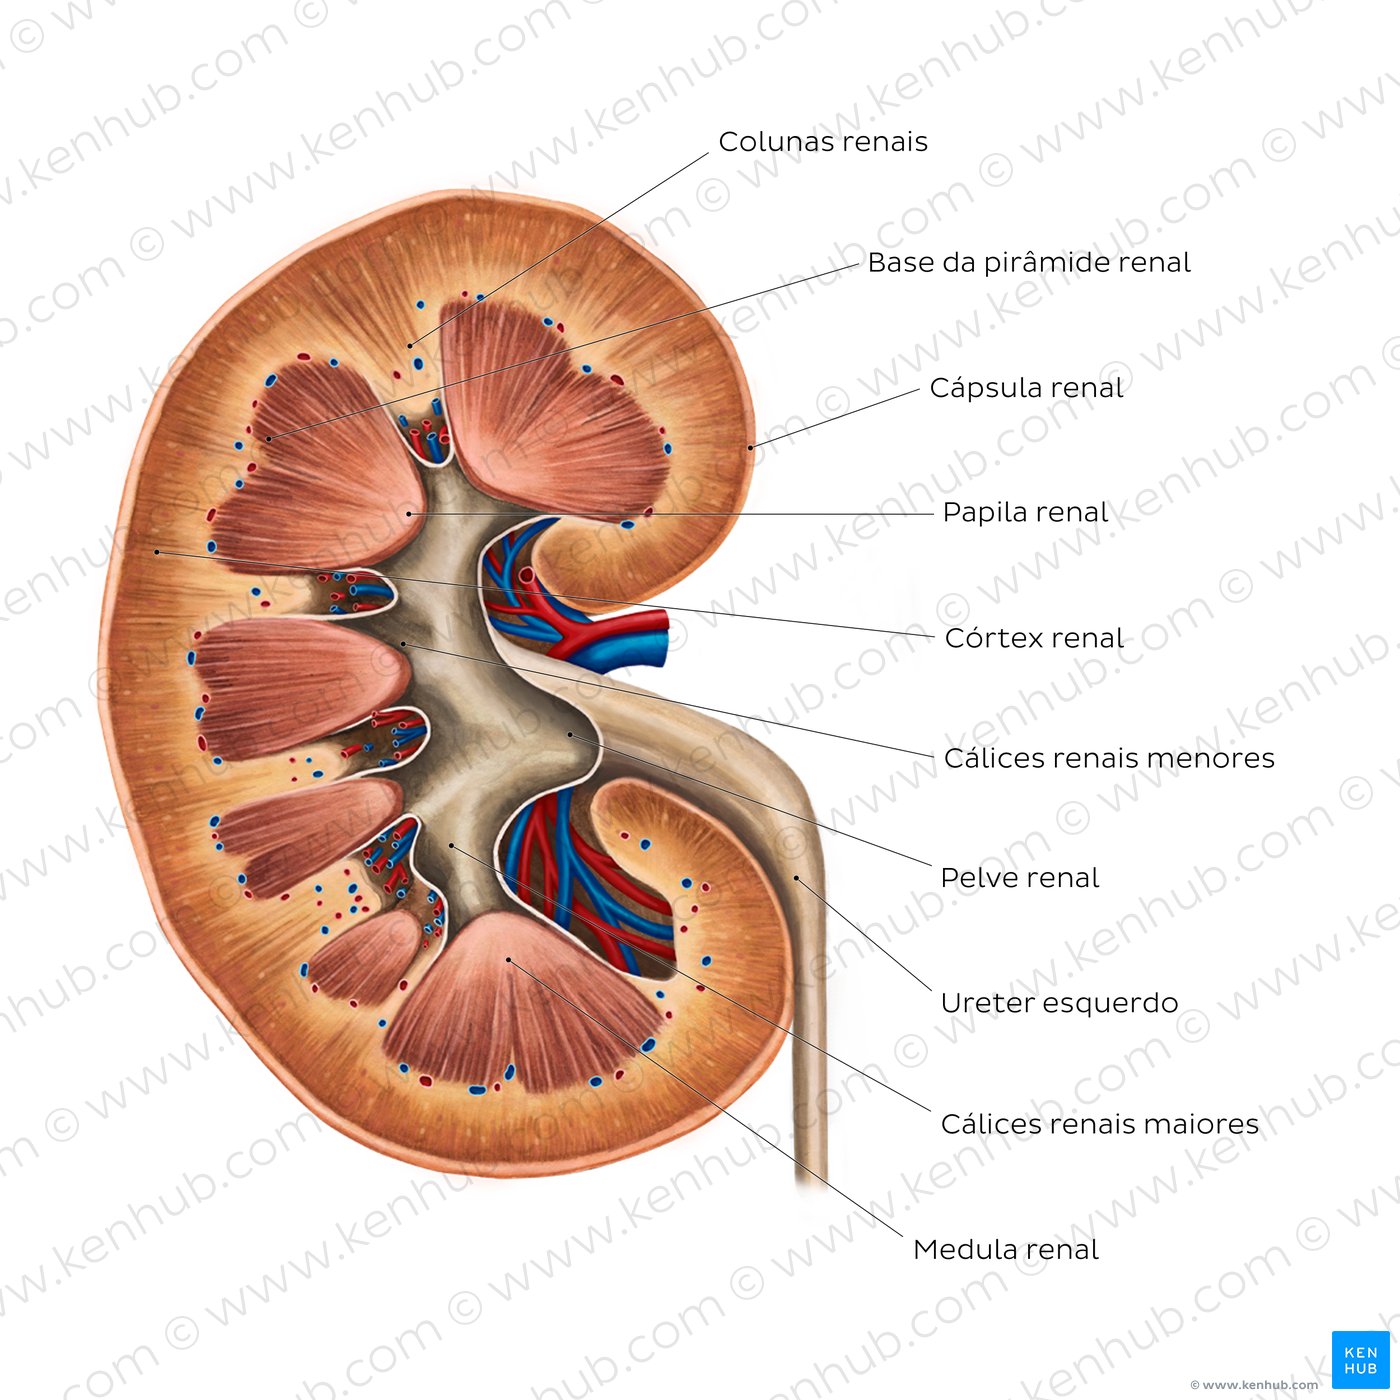 Anatomia interna do rim